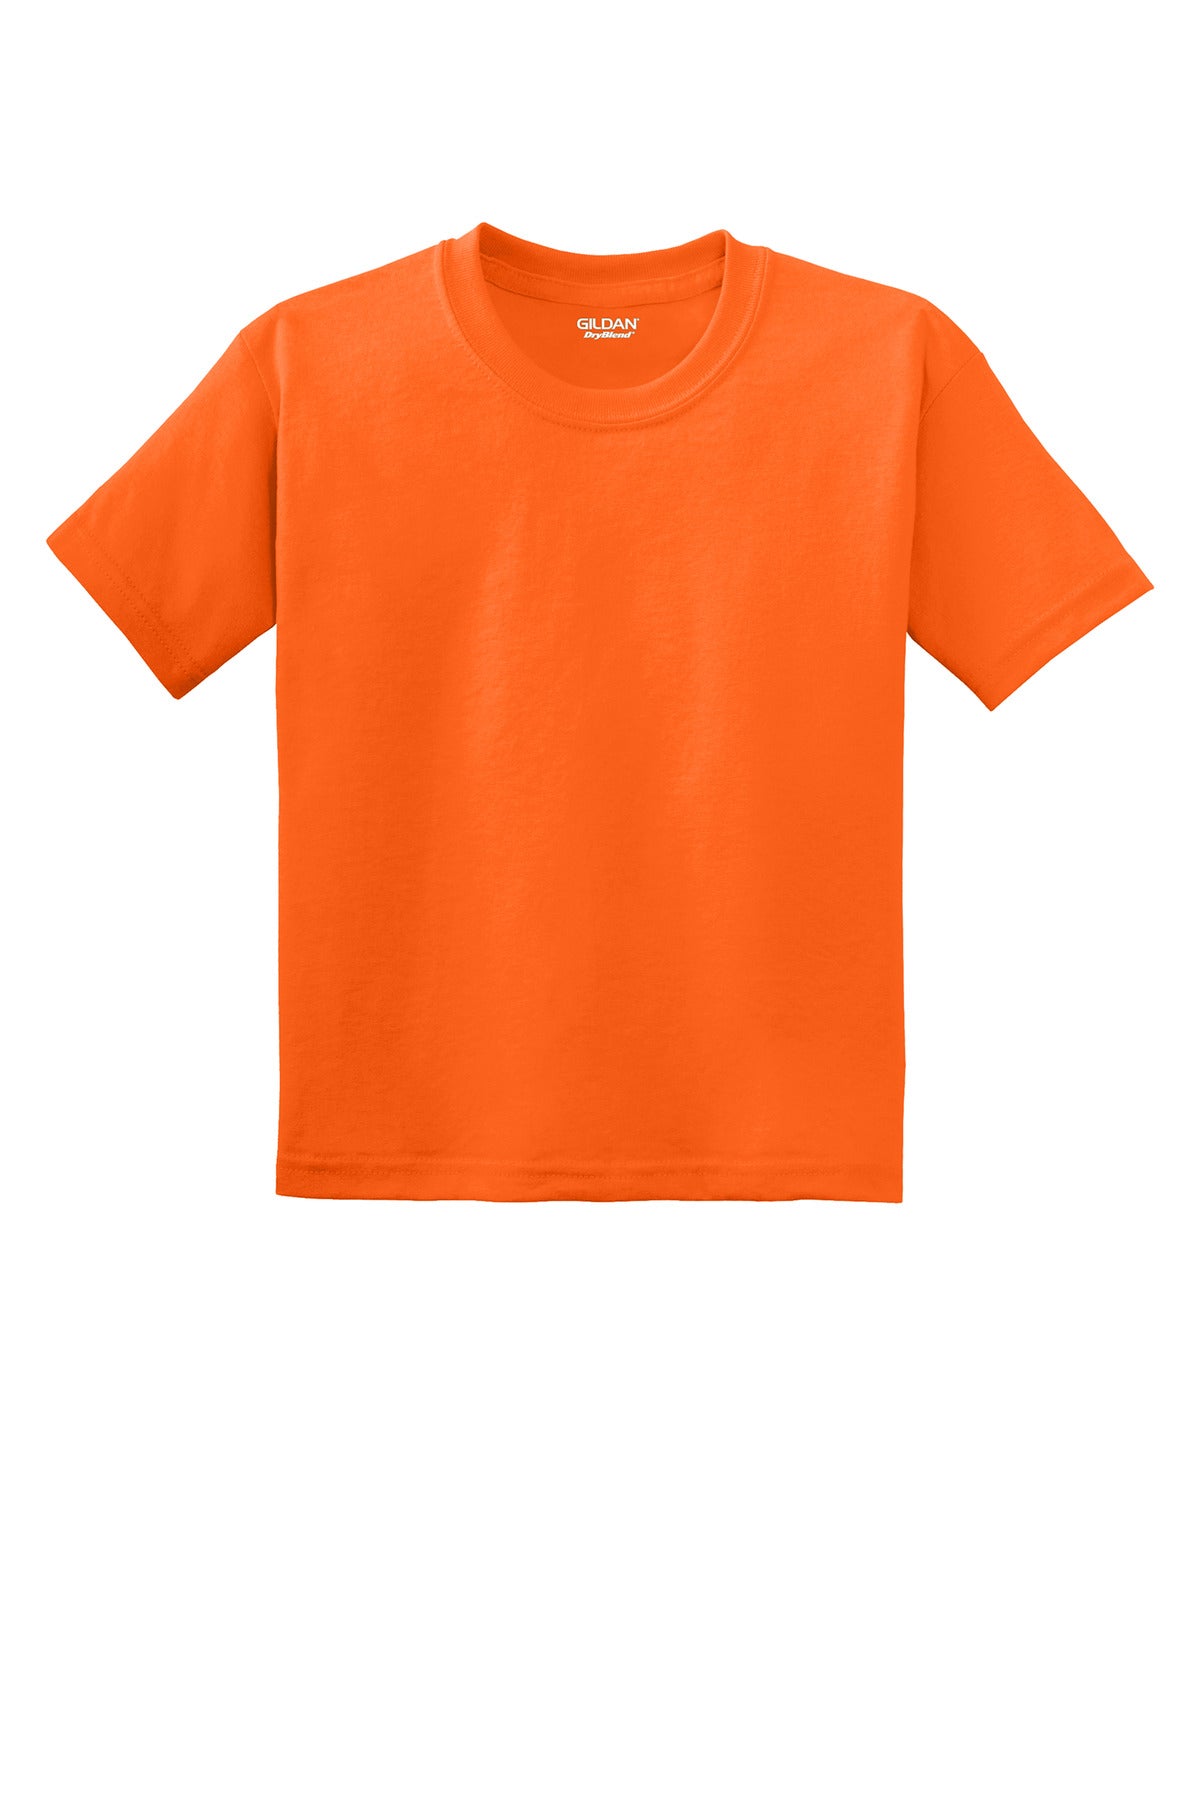 Gildan - DryBlend 50 Cotton/50 Poly T-Shirt, Product